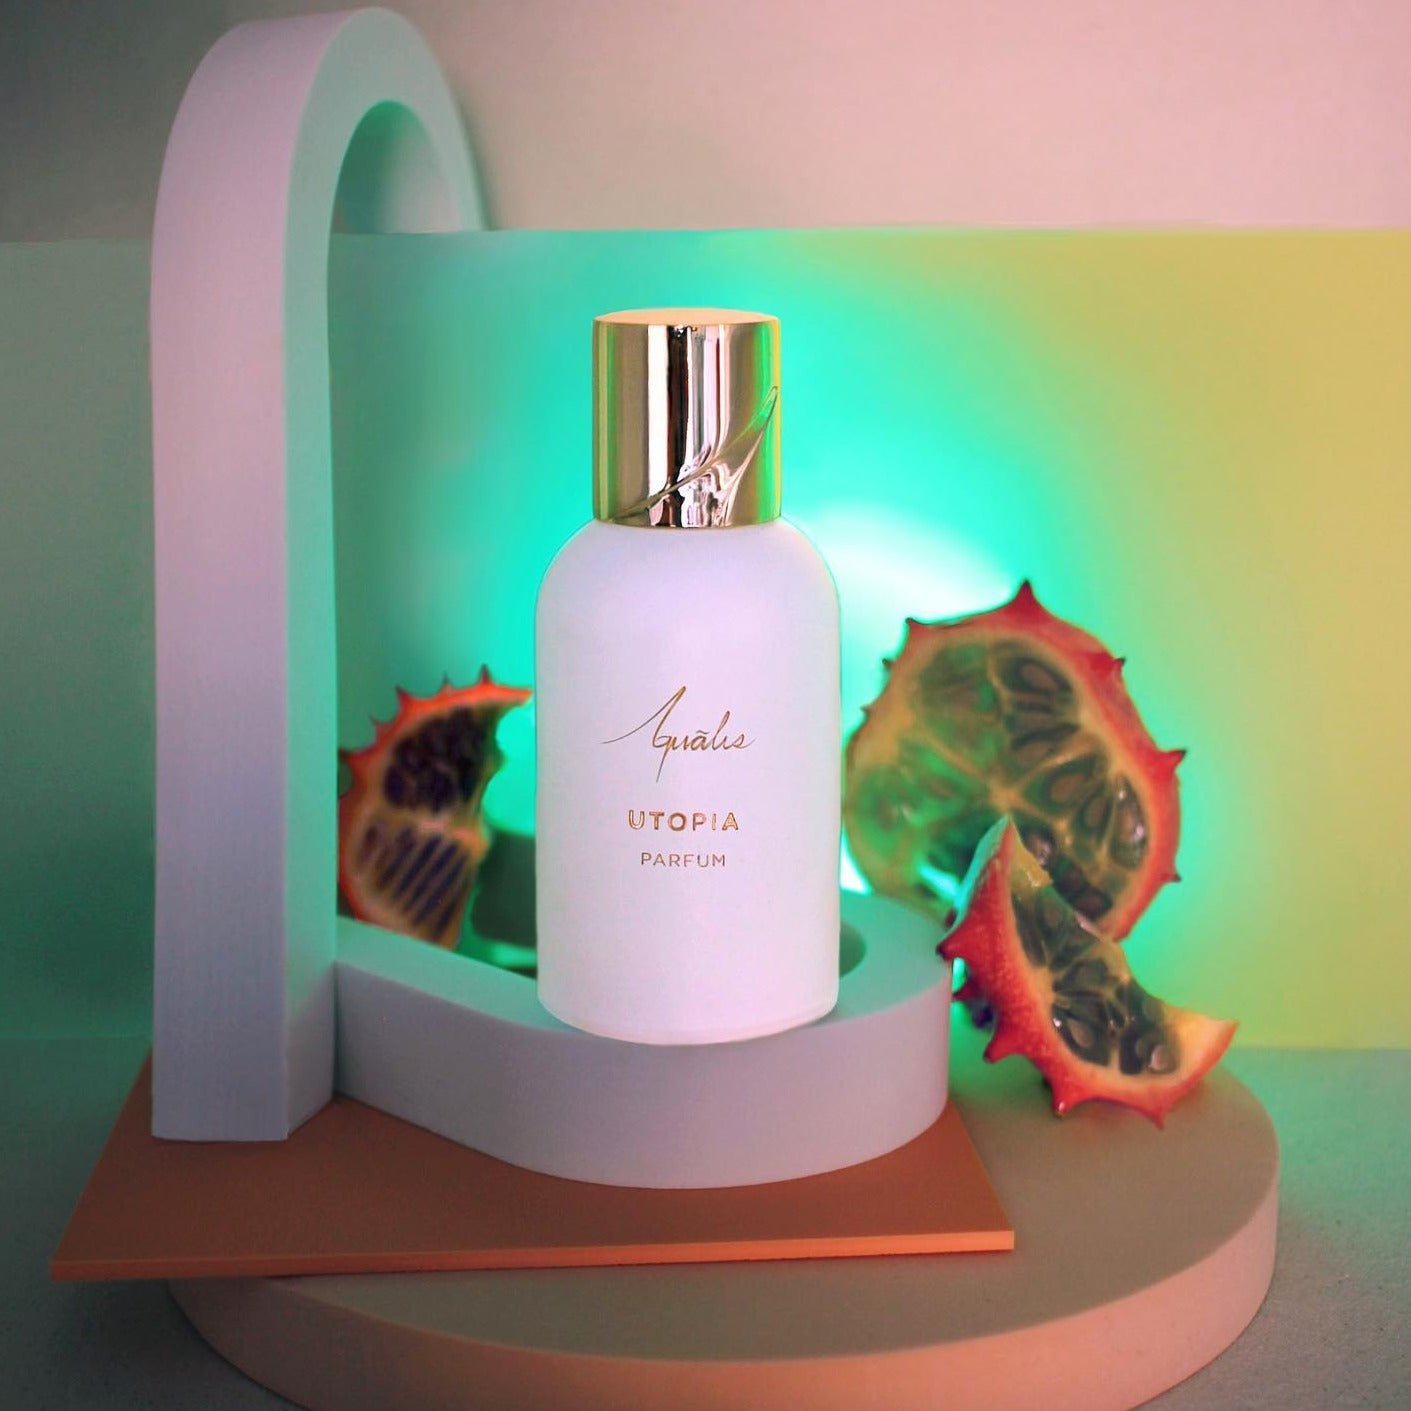 Aqualis Utopia Parfum | My Perfume Shop Australia